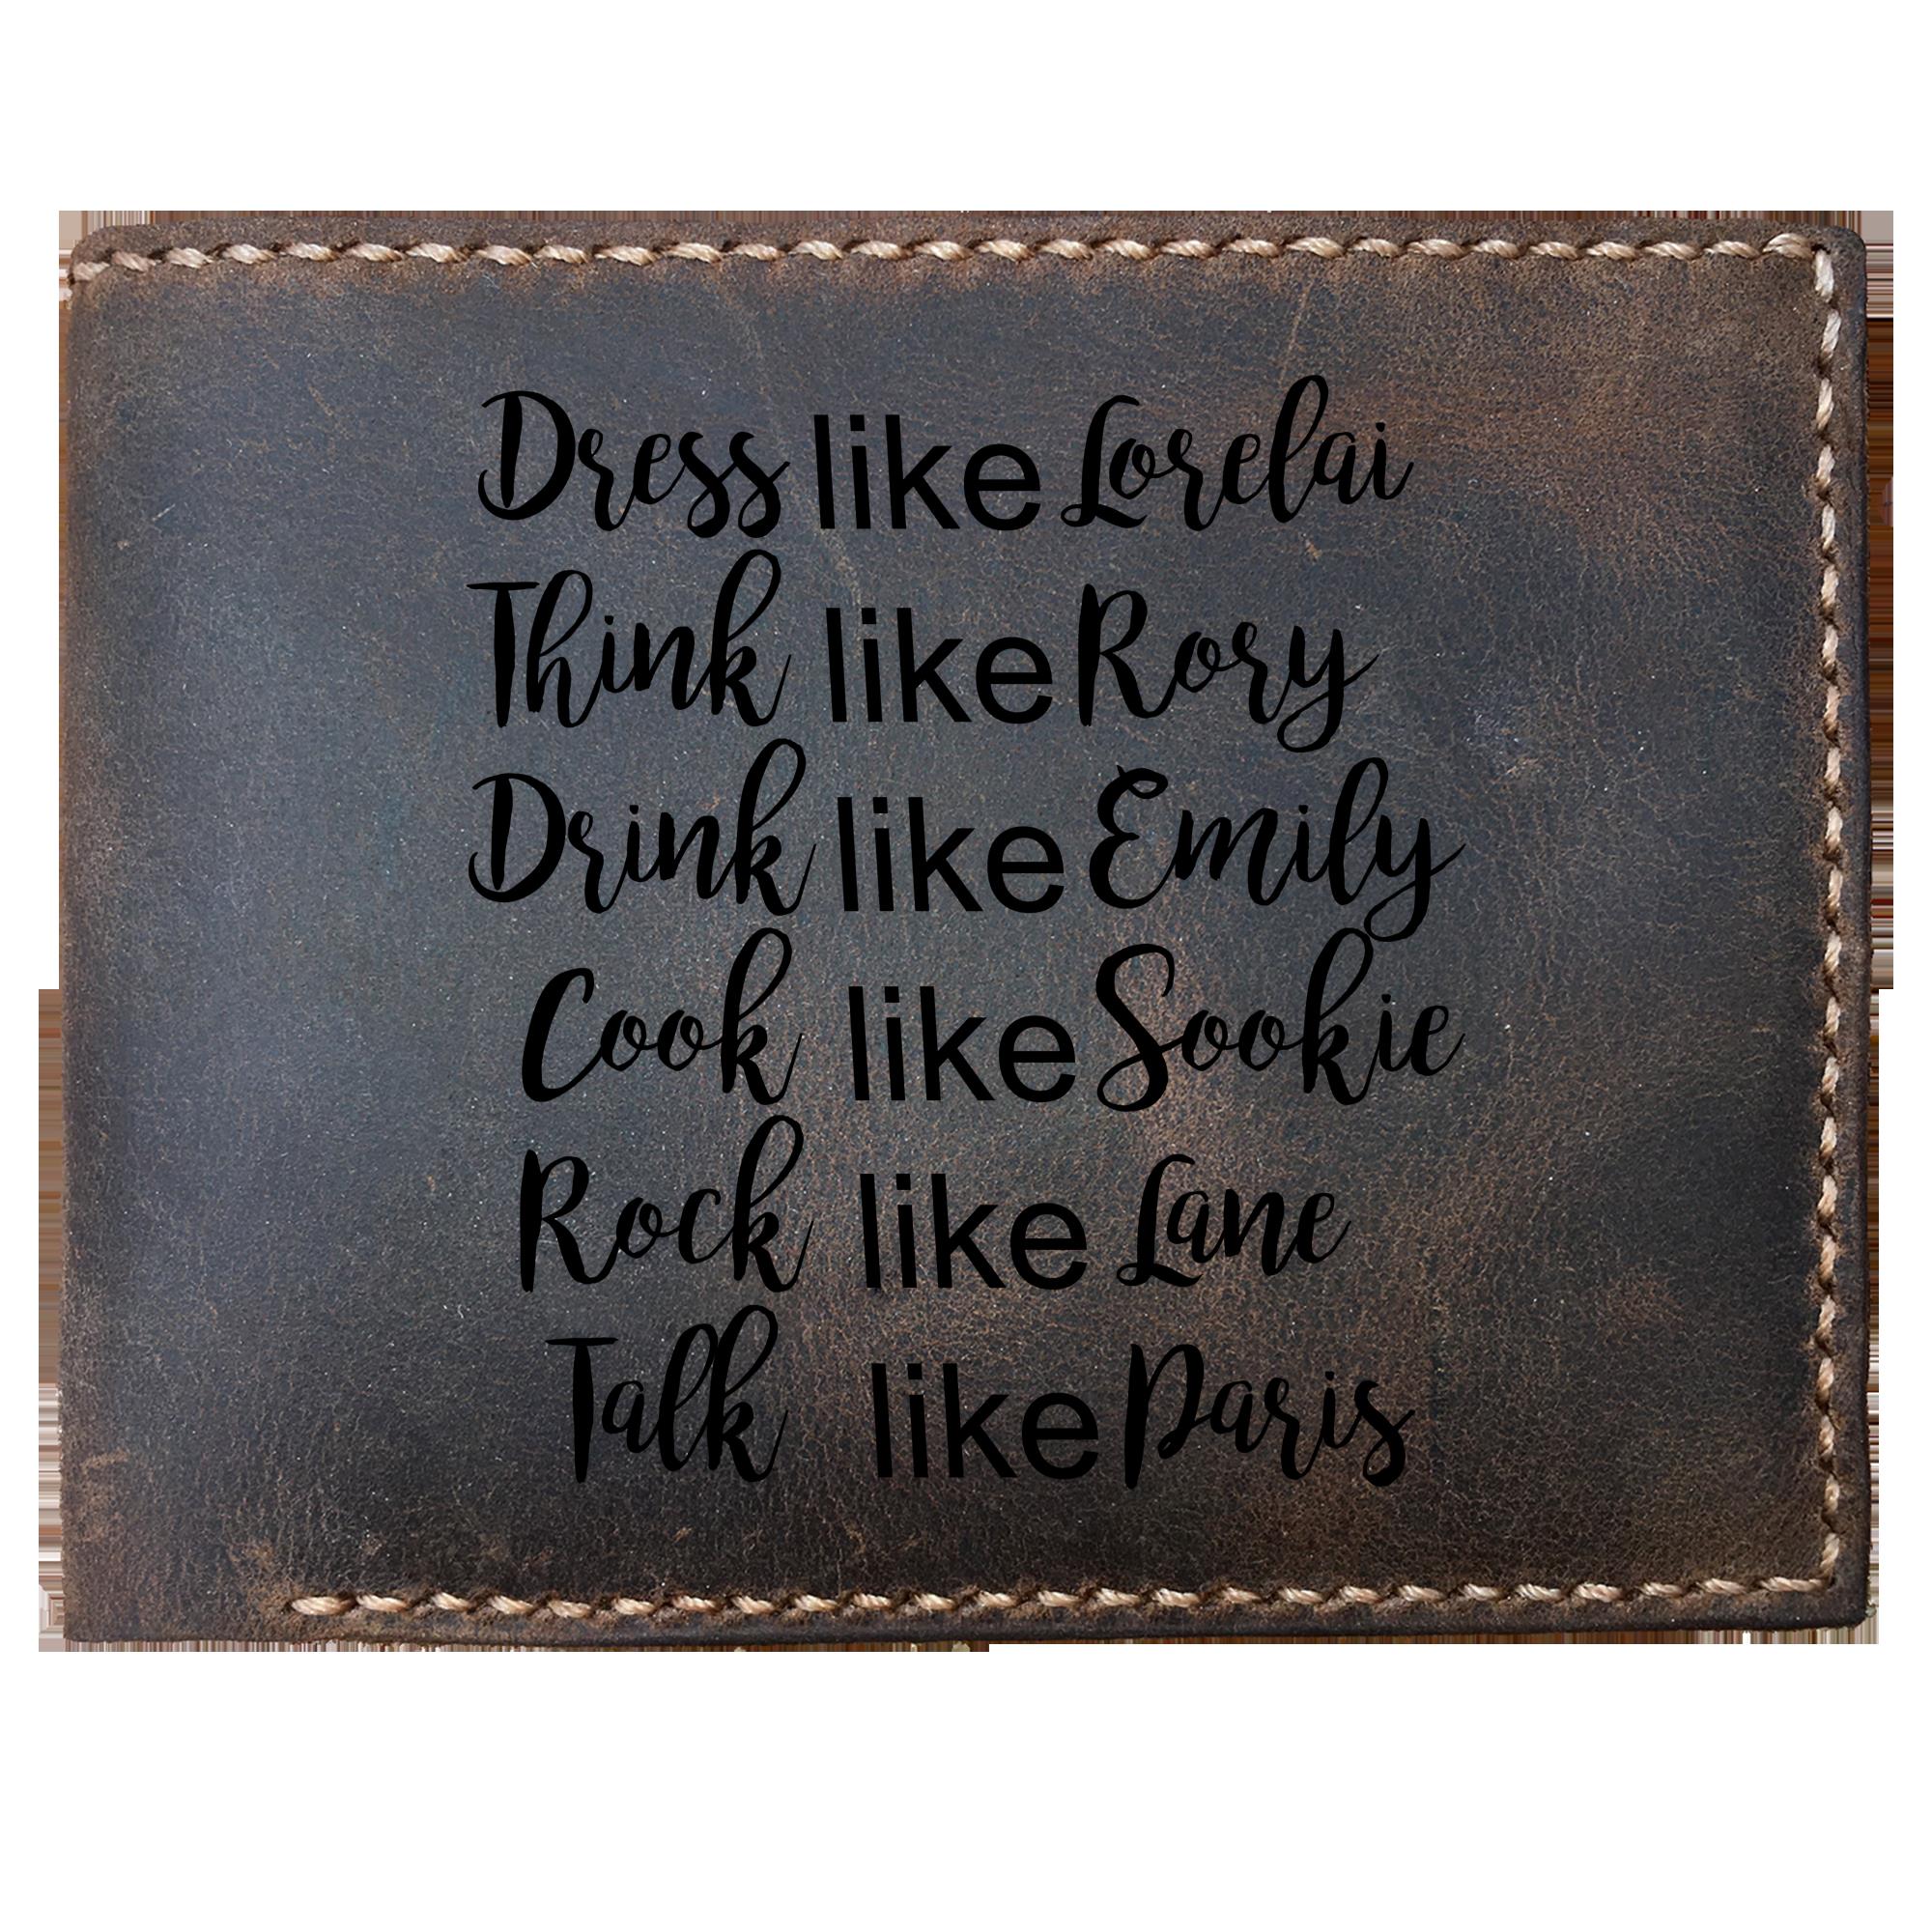 Skitongifts Funny Custom Engraved Bifold Leather Wallet, Pop Haste Dress Like Lorelai, Think Like Rory, Drink Like Emily, Cook Like Sookie